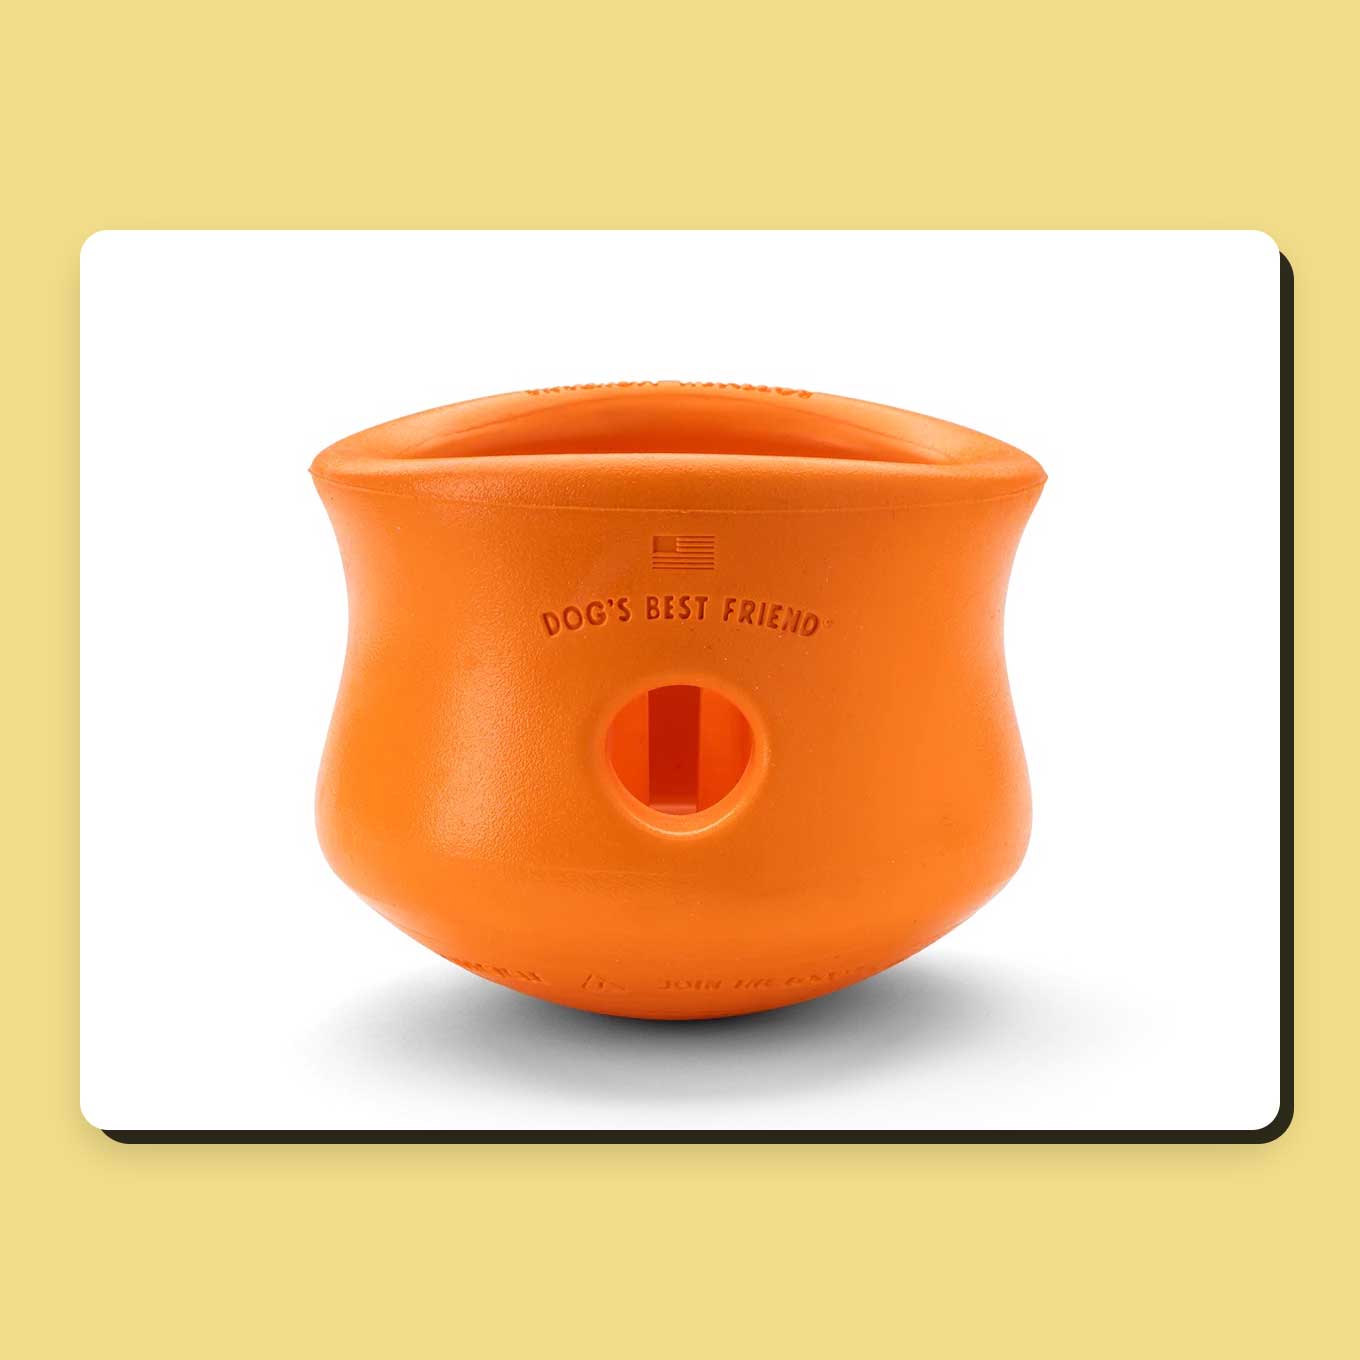 An orange rubber dog toy